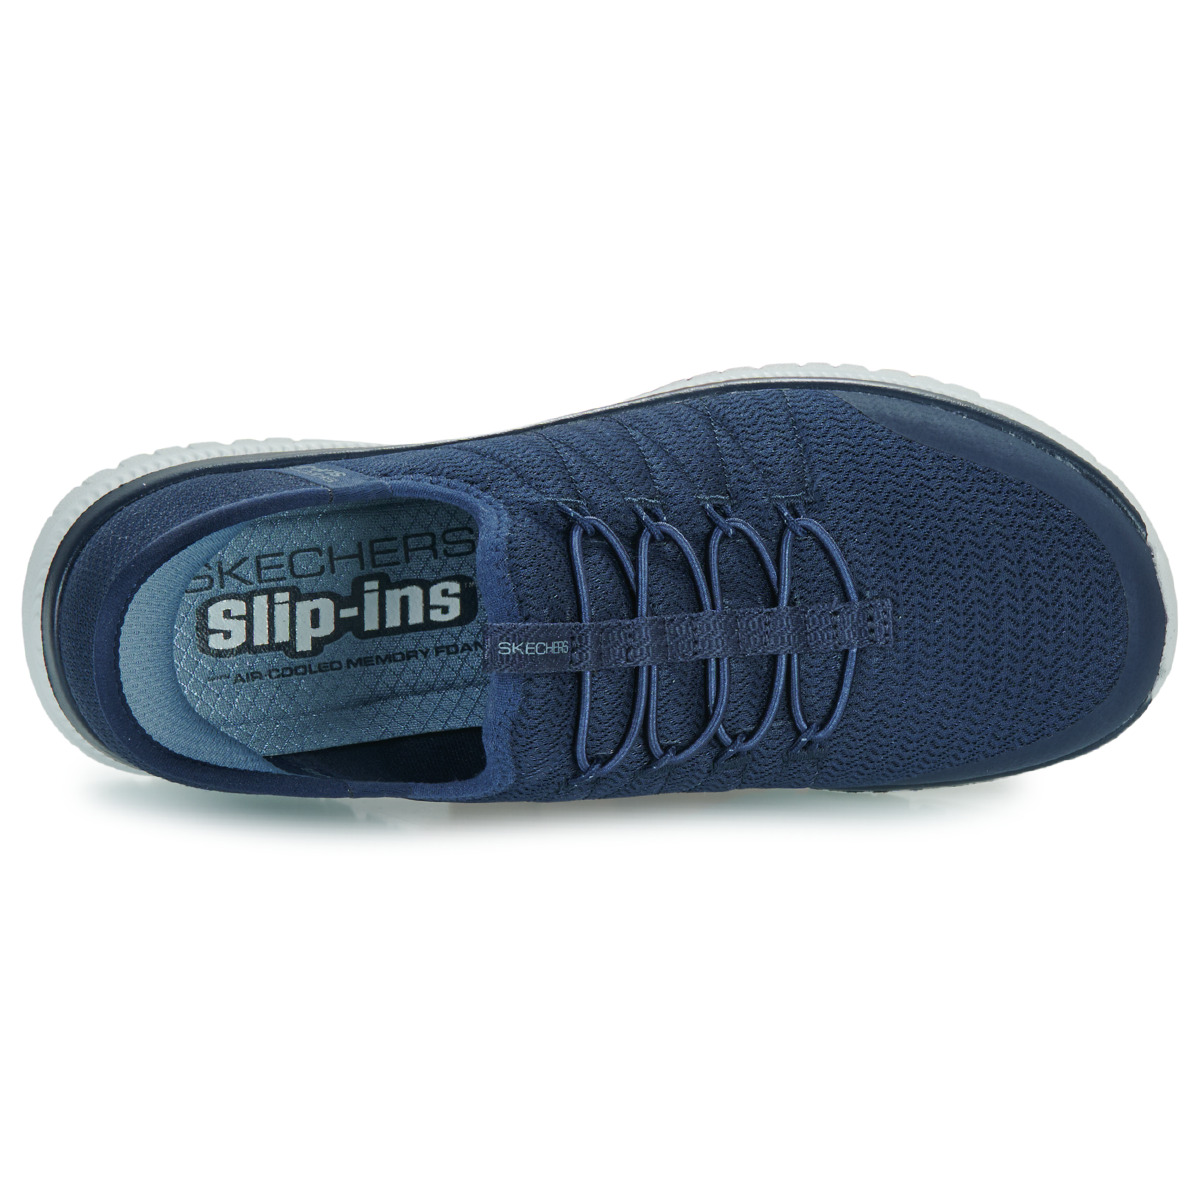 Skechers Marine HAND FREE SLIP-INS: VIRTUE - GLOW 12aMPBIw